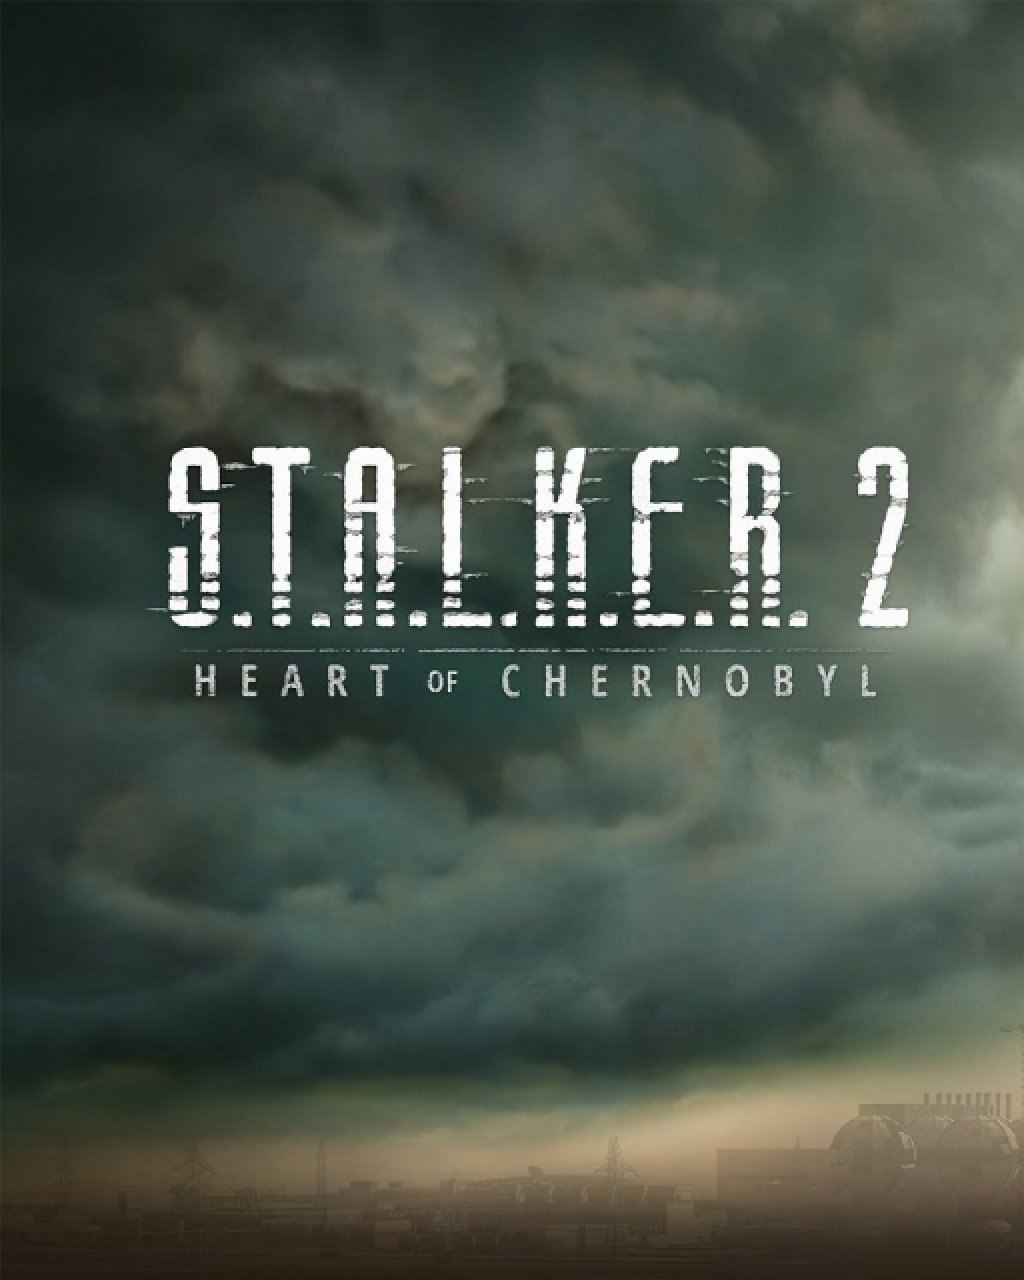 S.T.A.L.K.E.R. 2 Heart of Chornobyl